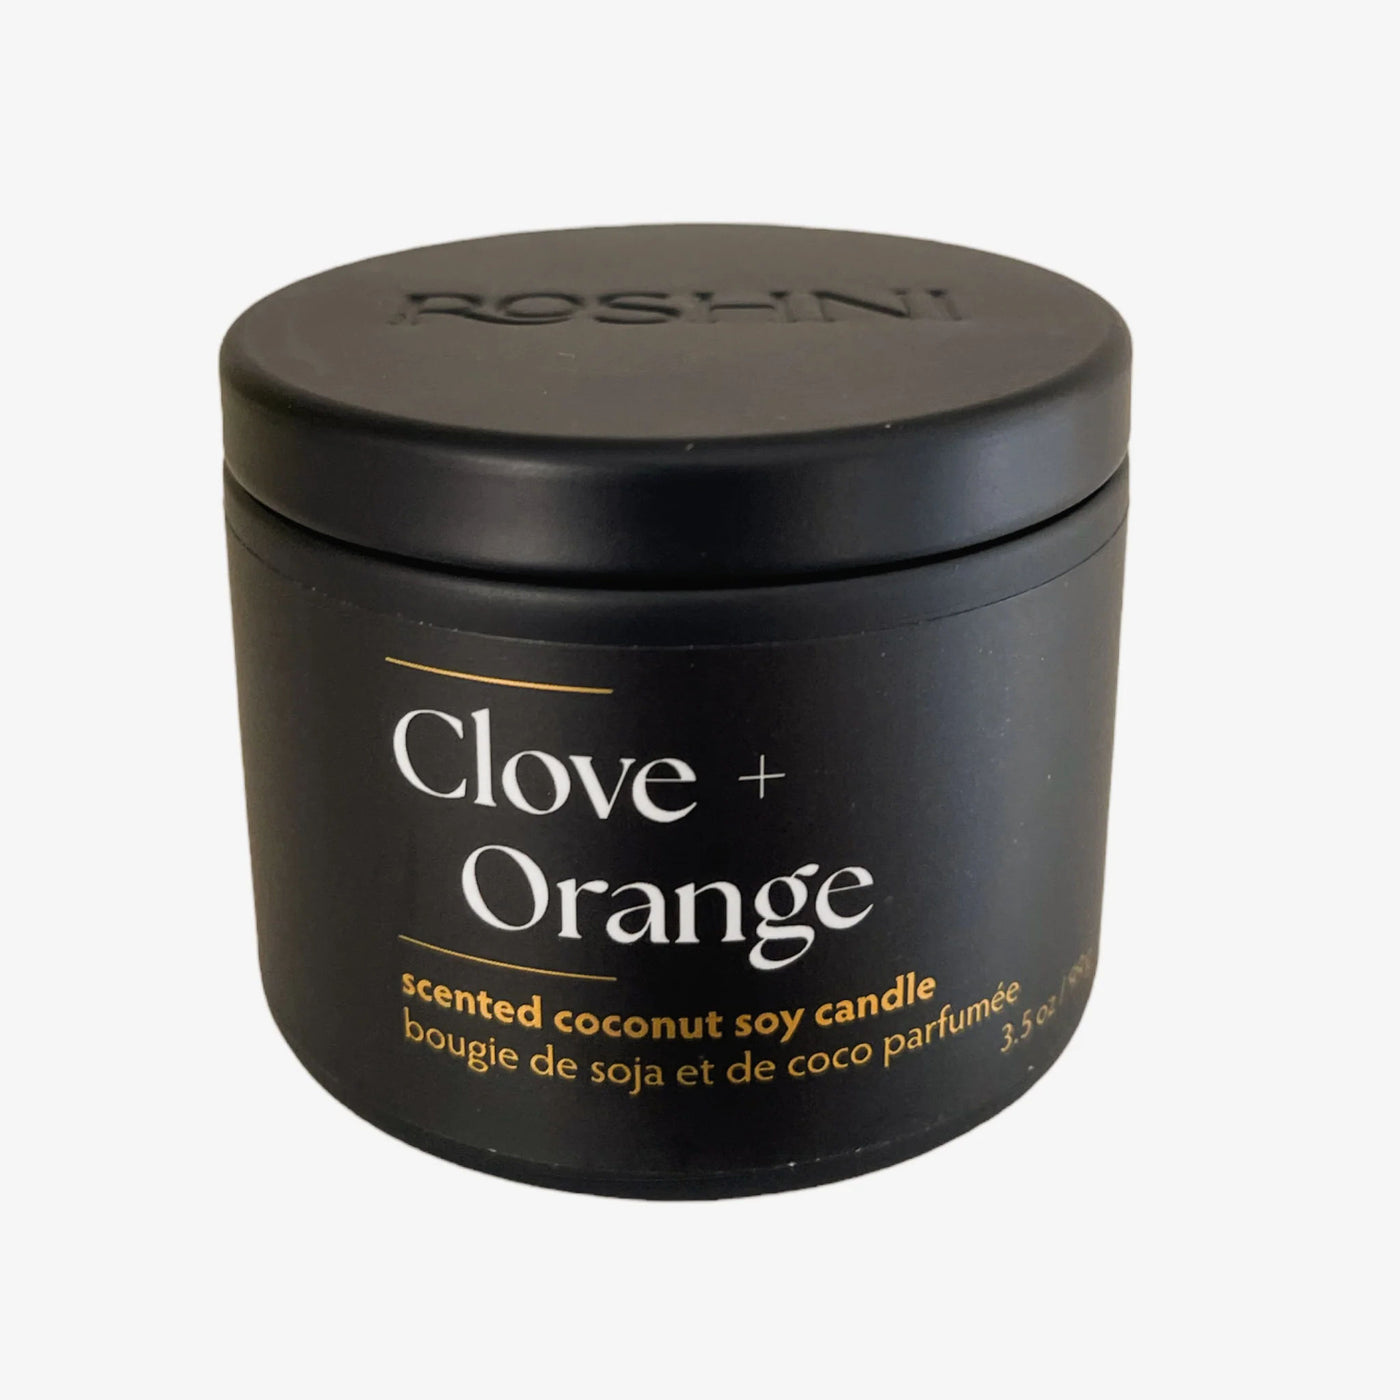 Clove + Orange